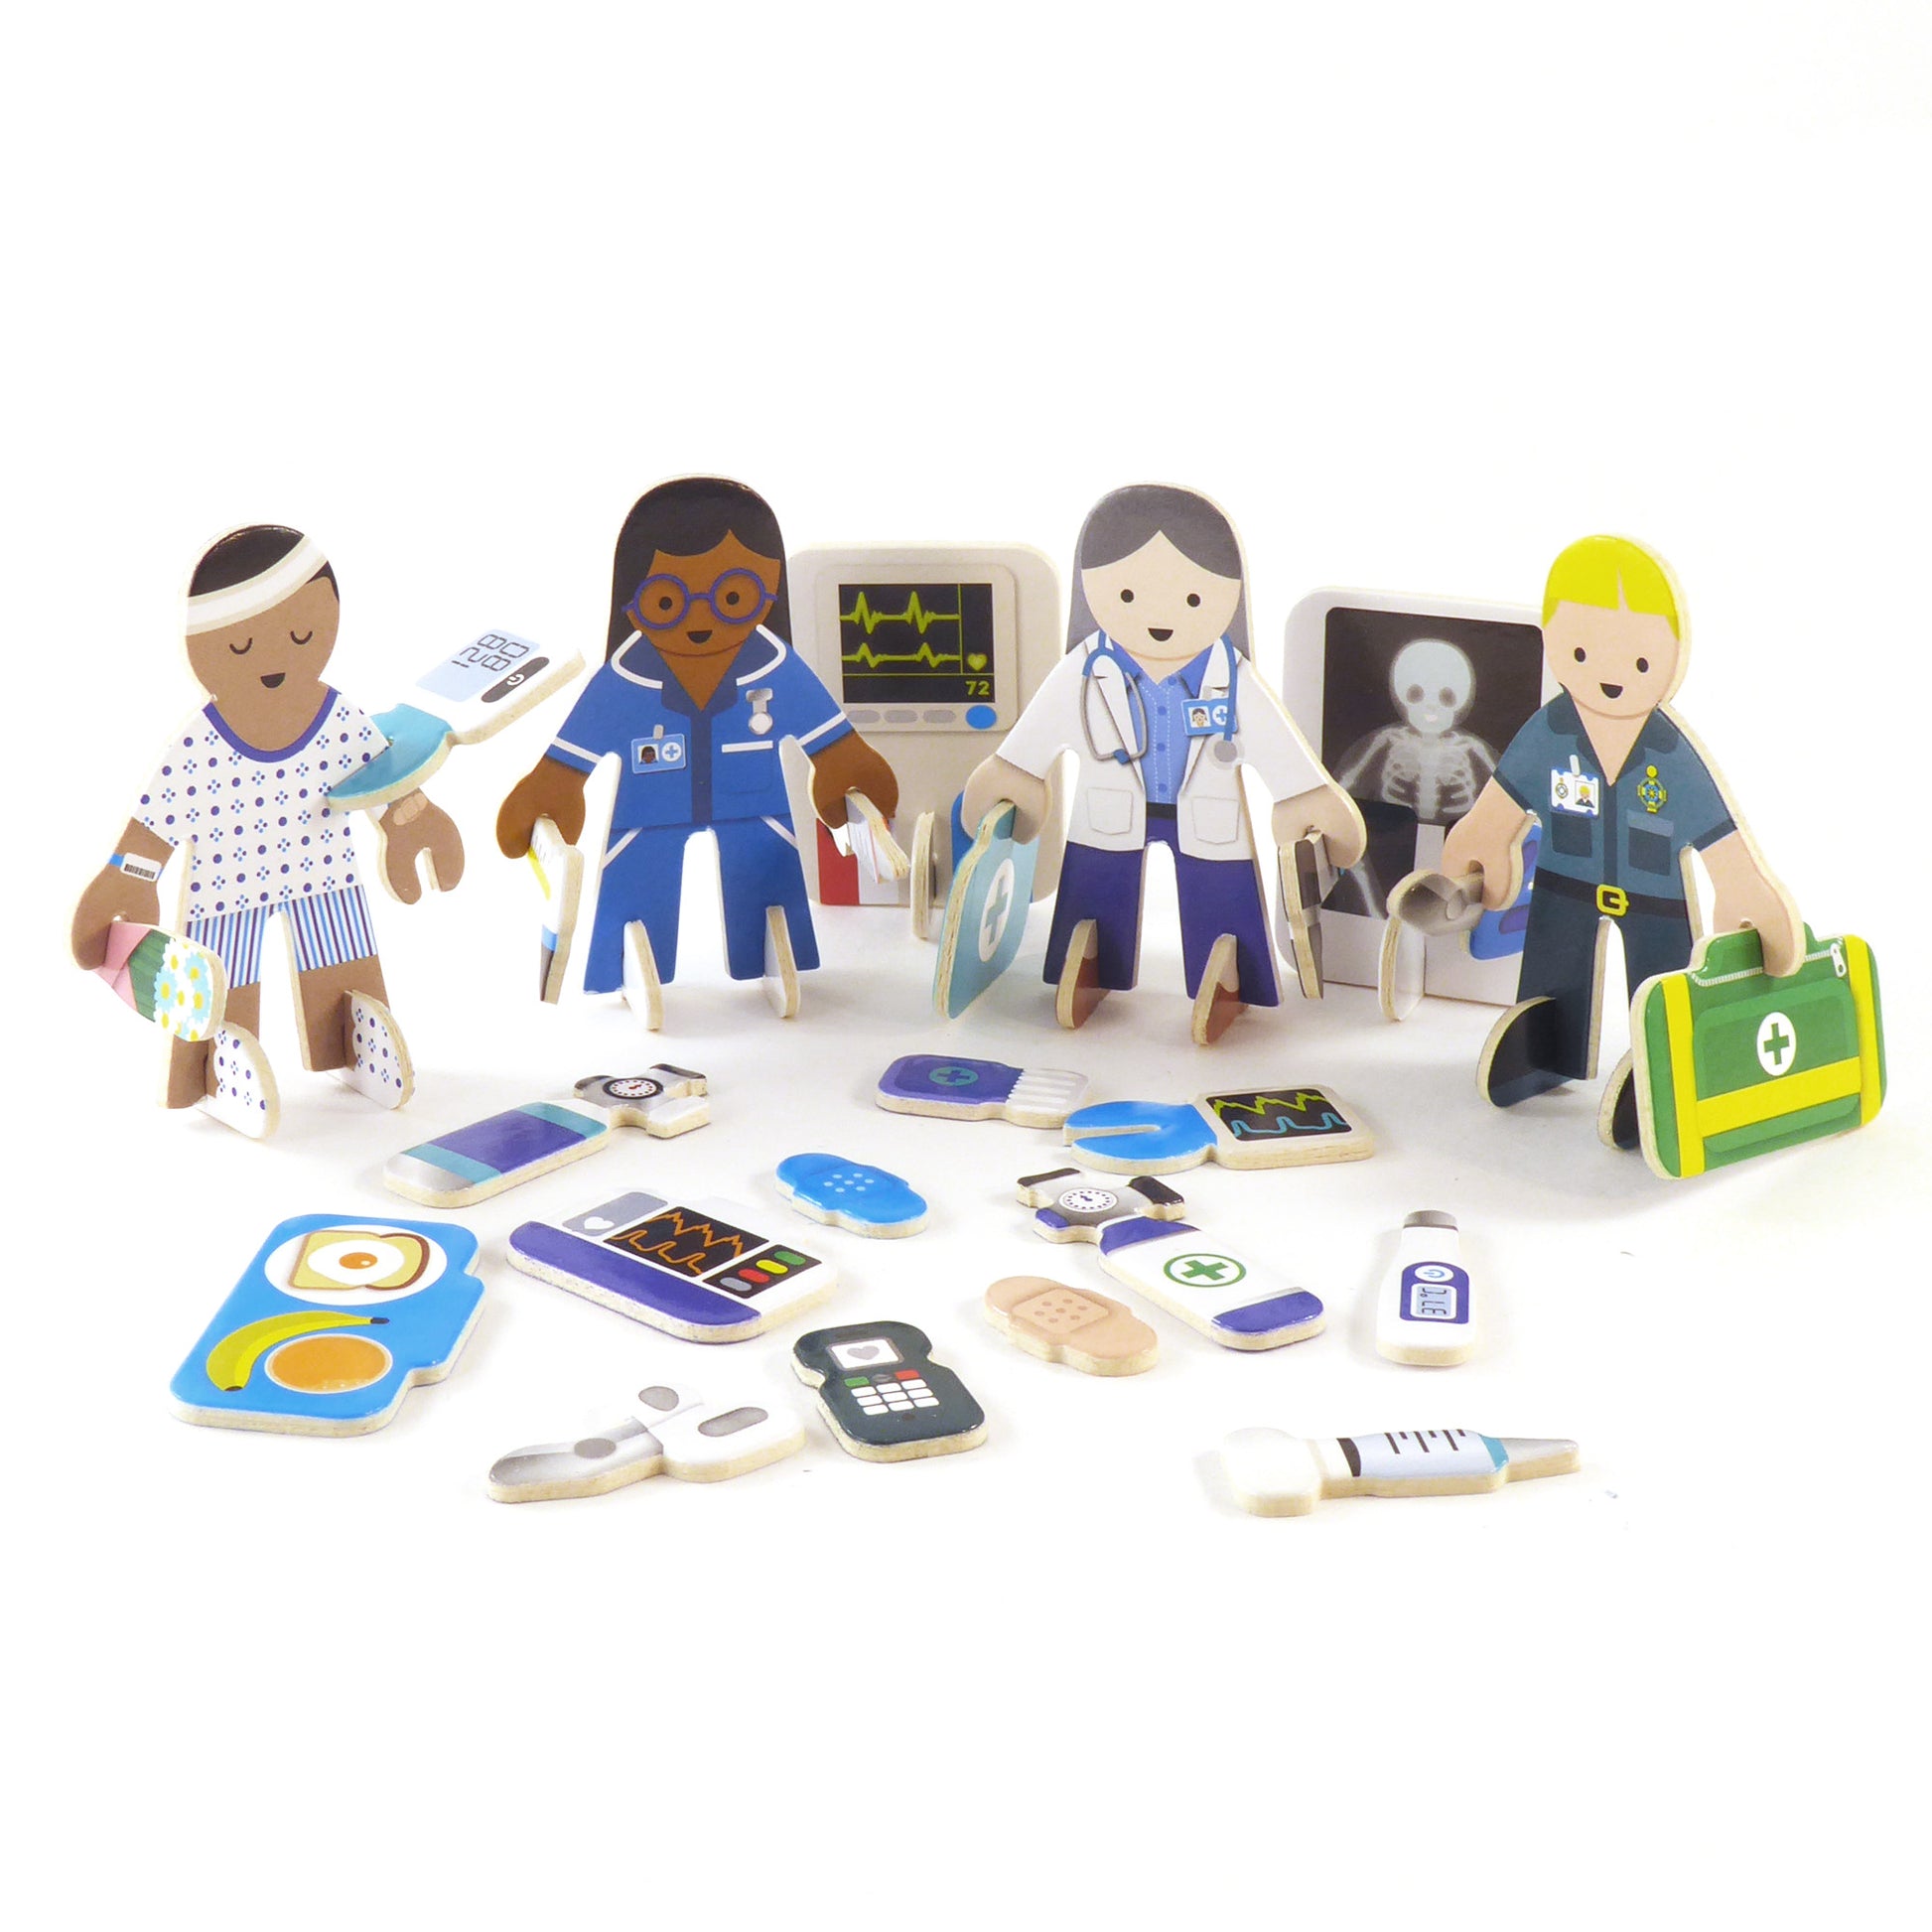 Playpress Eco Friendly Zero Waste Children's Doctor Nurse GP Hospital Playset Gift